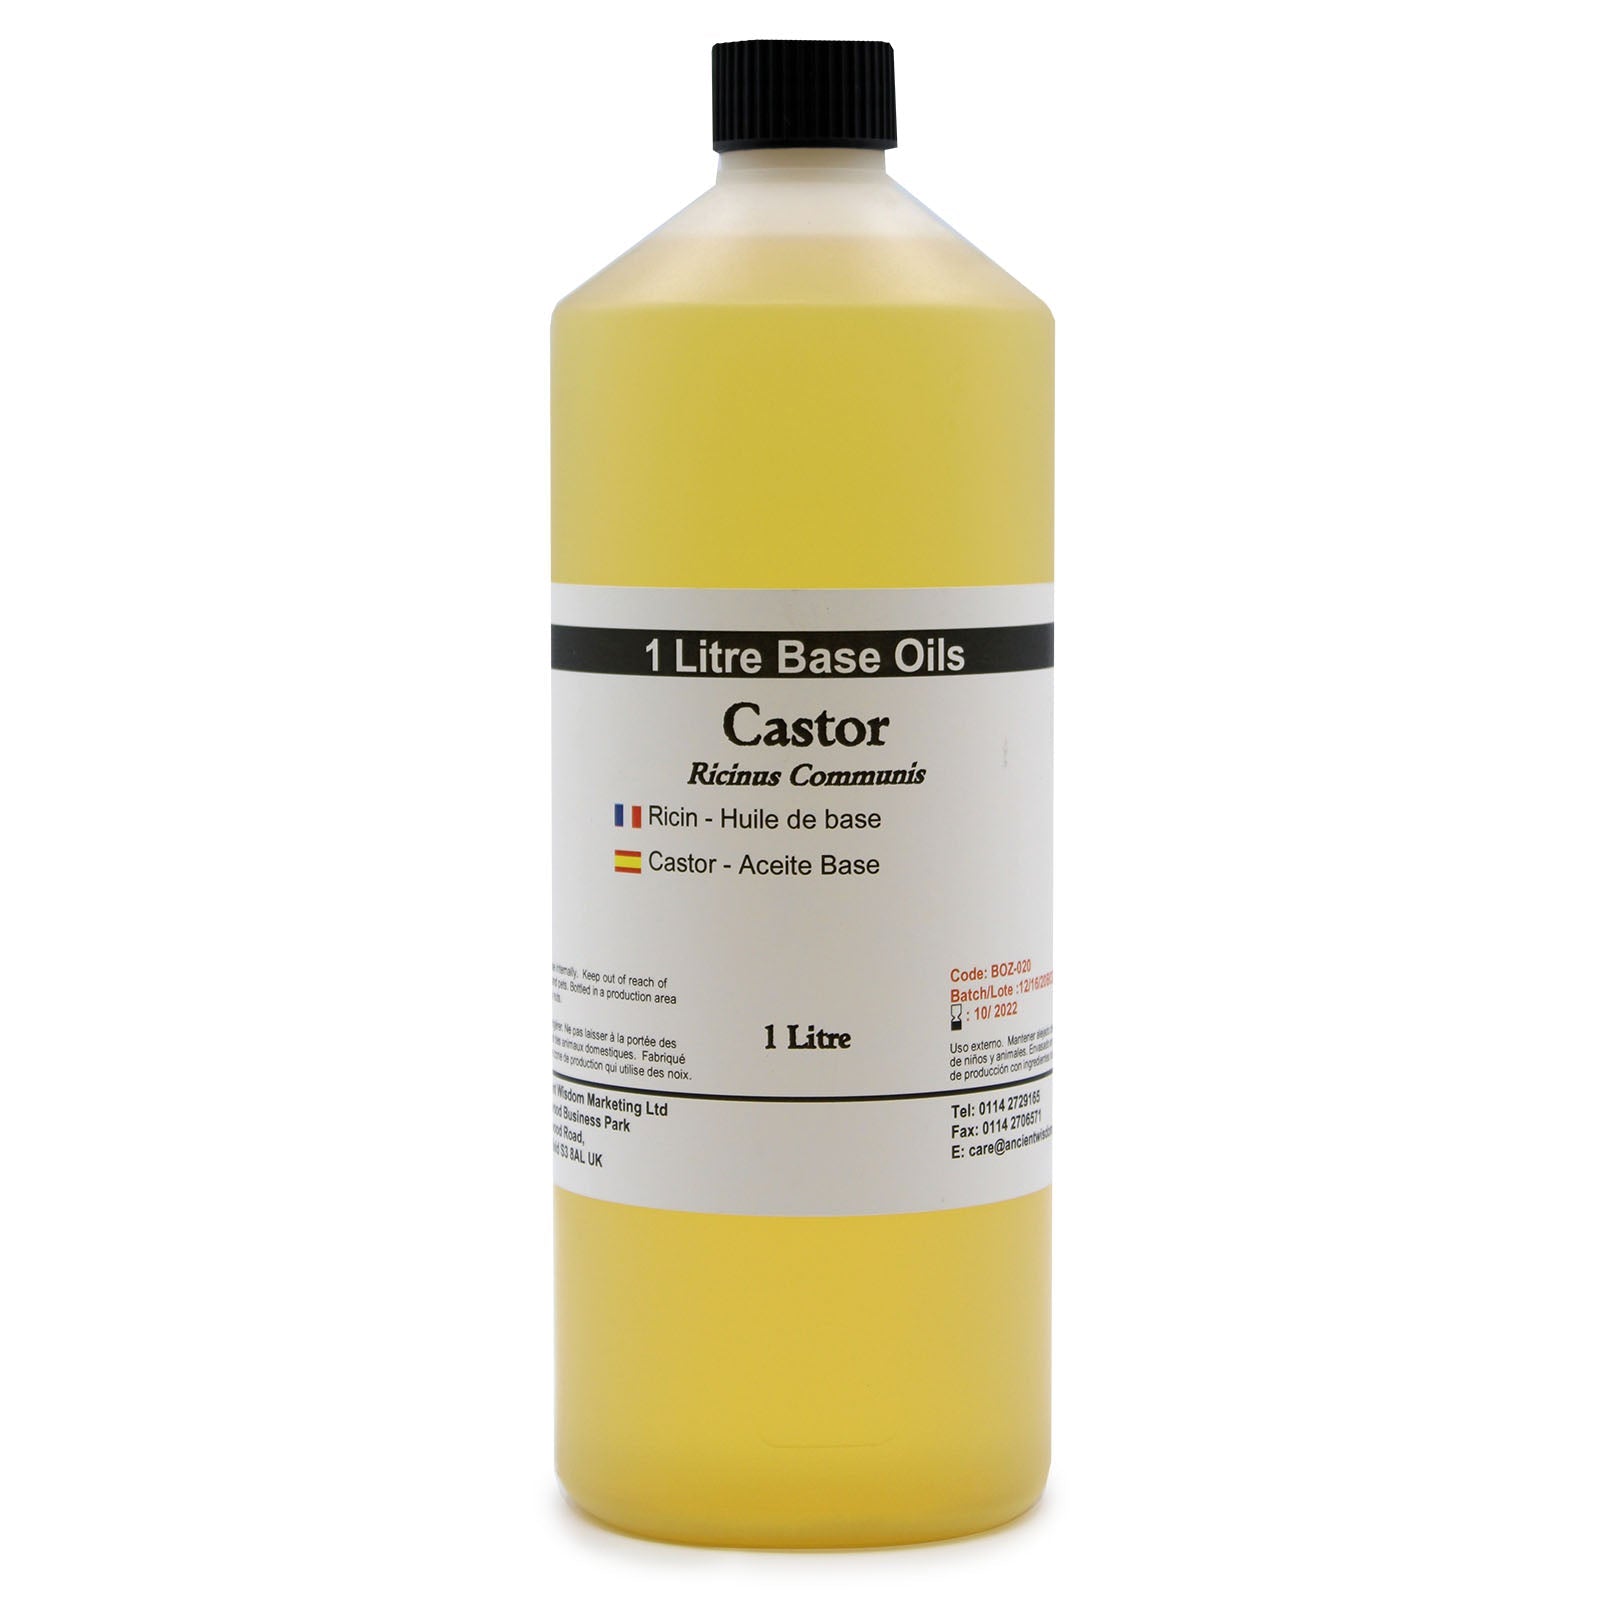 View Castor Oil 1 Litre information